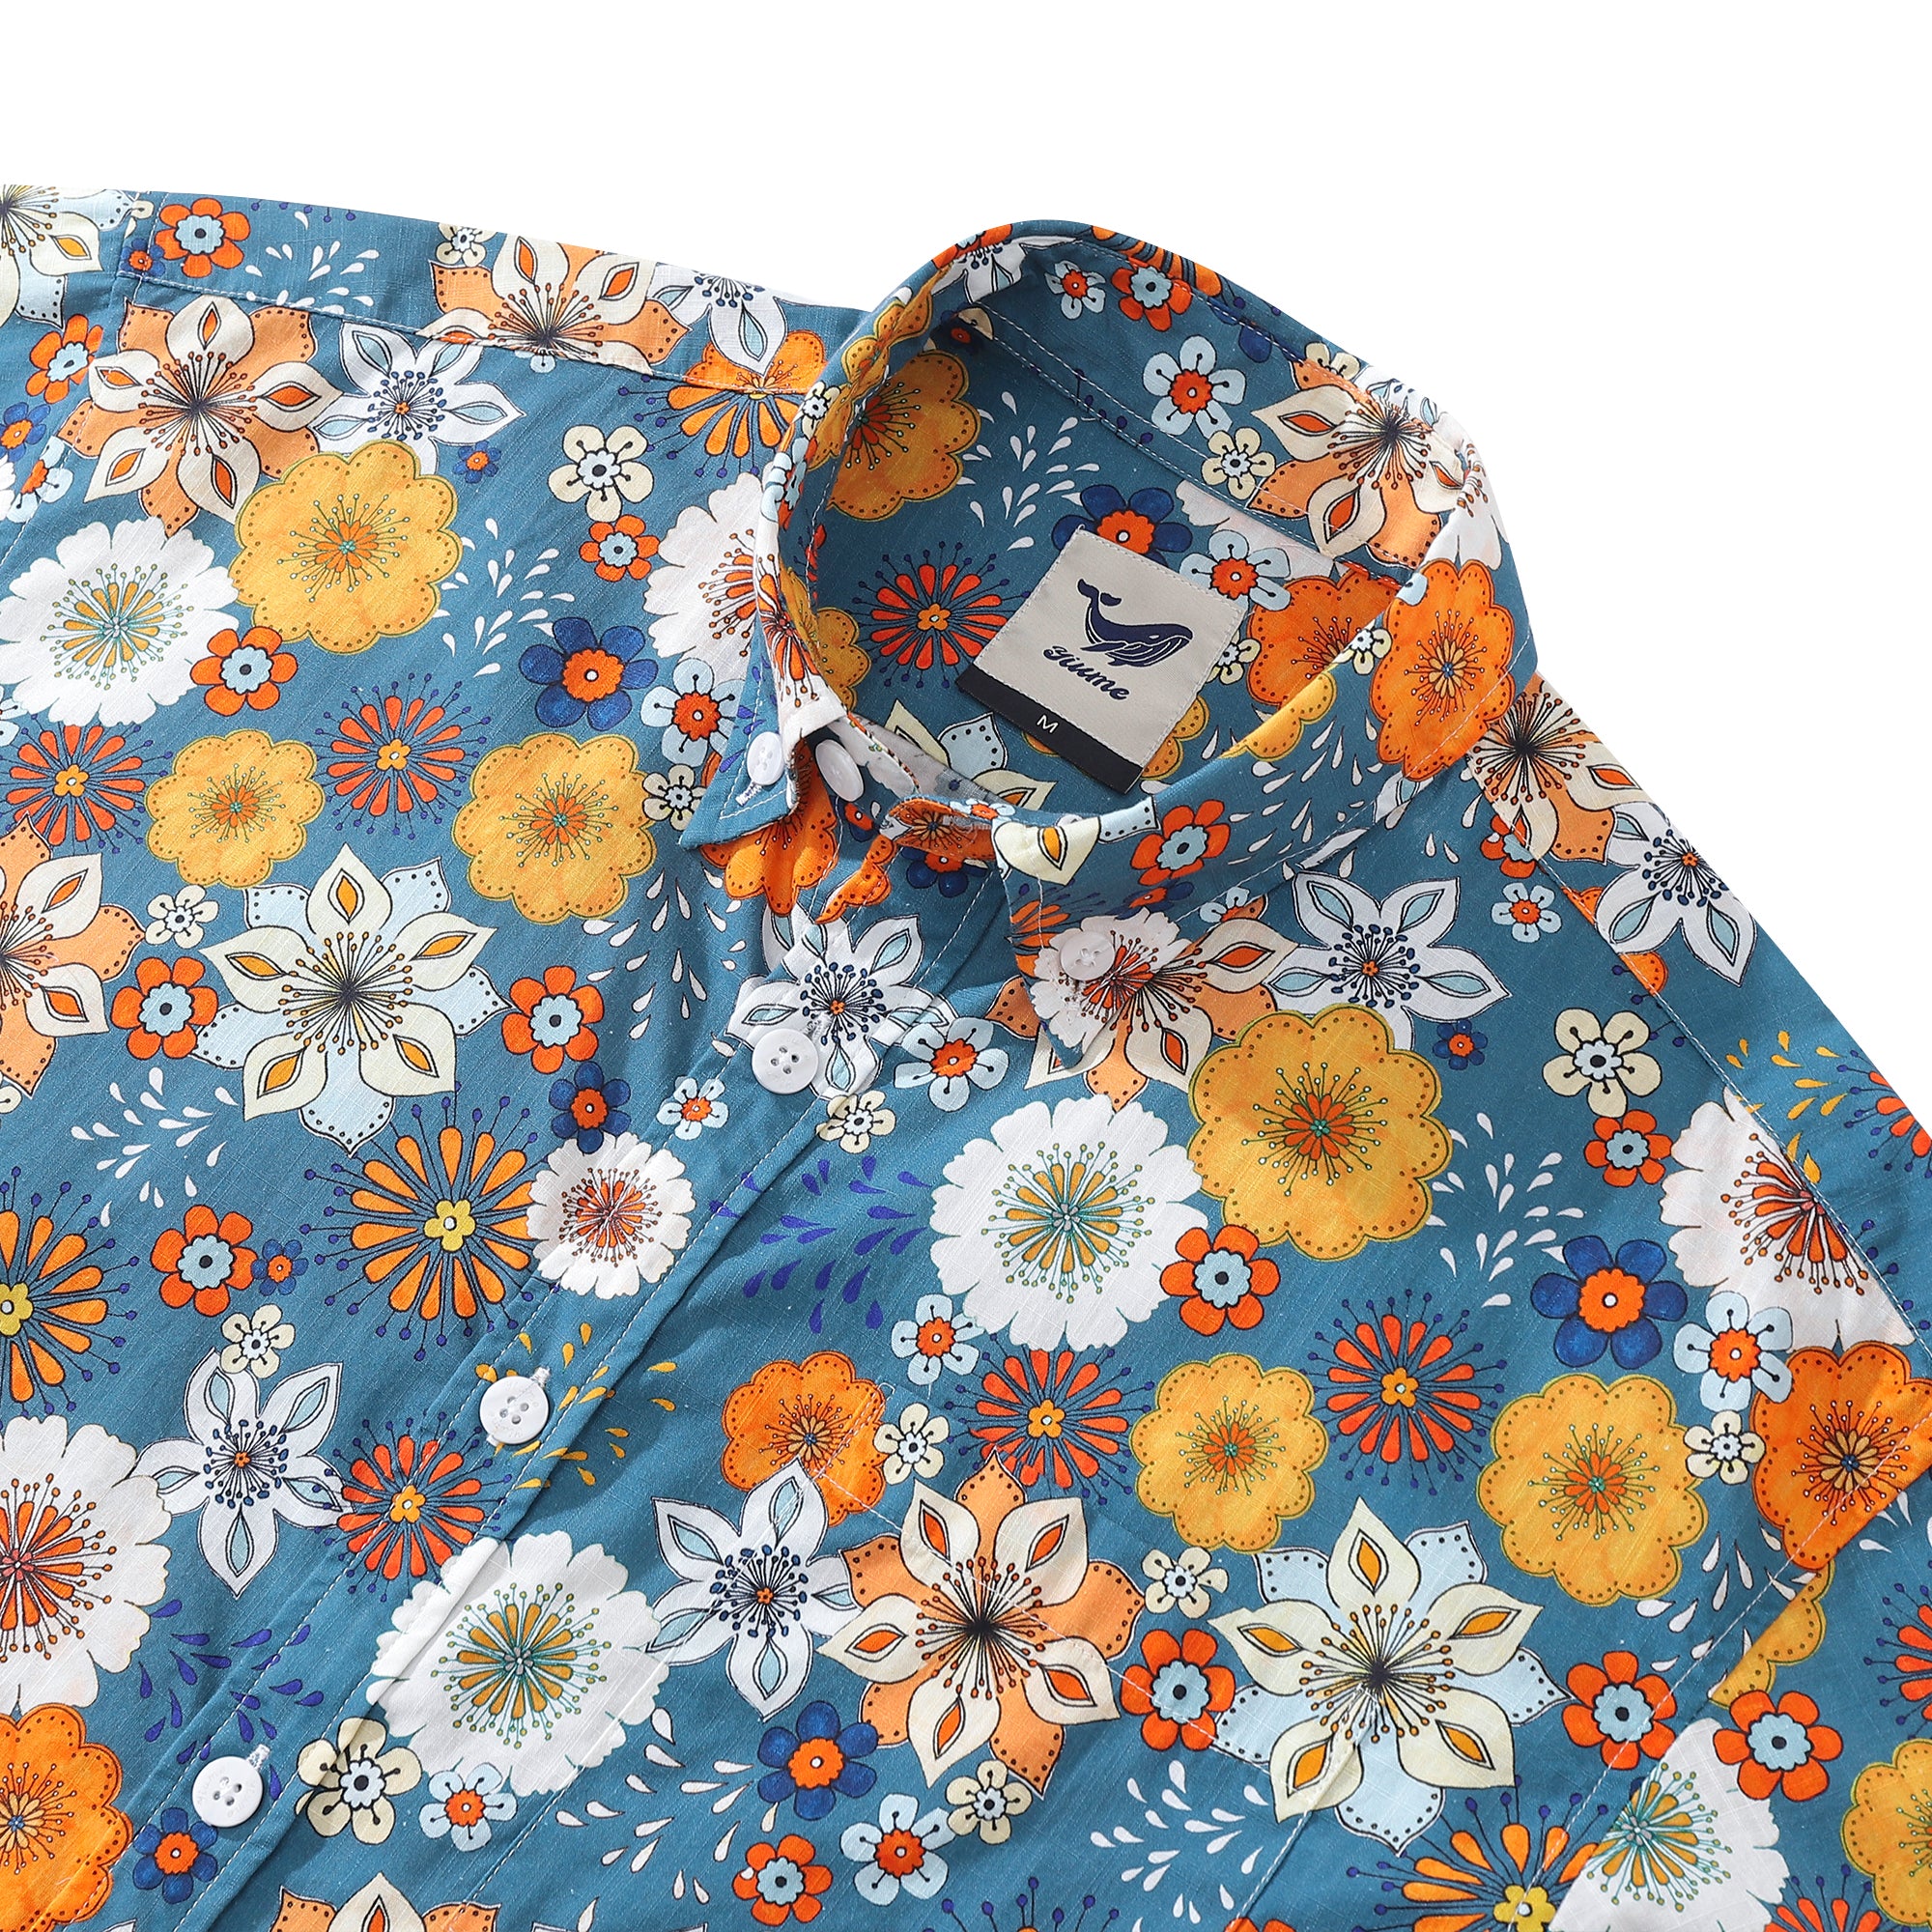 Men's Hawaiian Shirt 60's Floral Print By Samantha O' Malley Cotton Button-down Short Sleeve Aloha Shirt